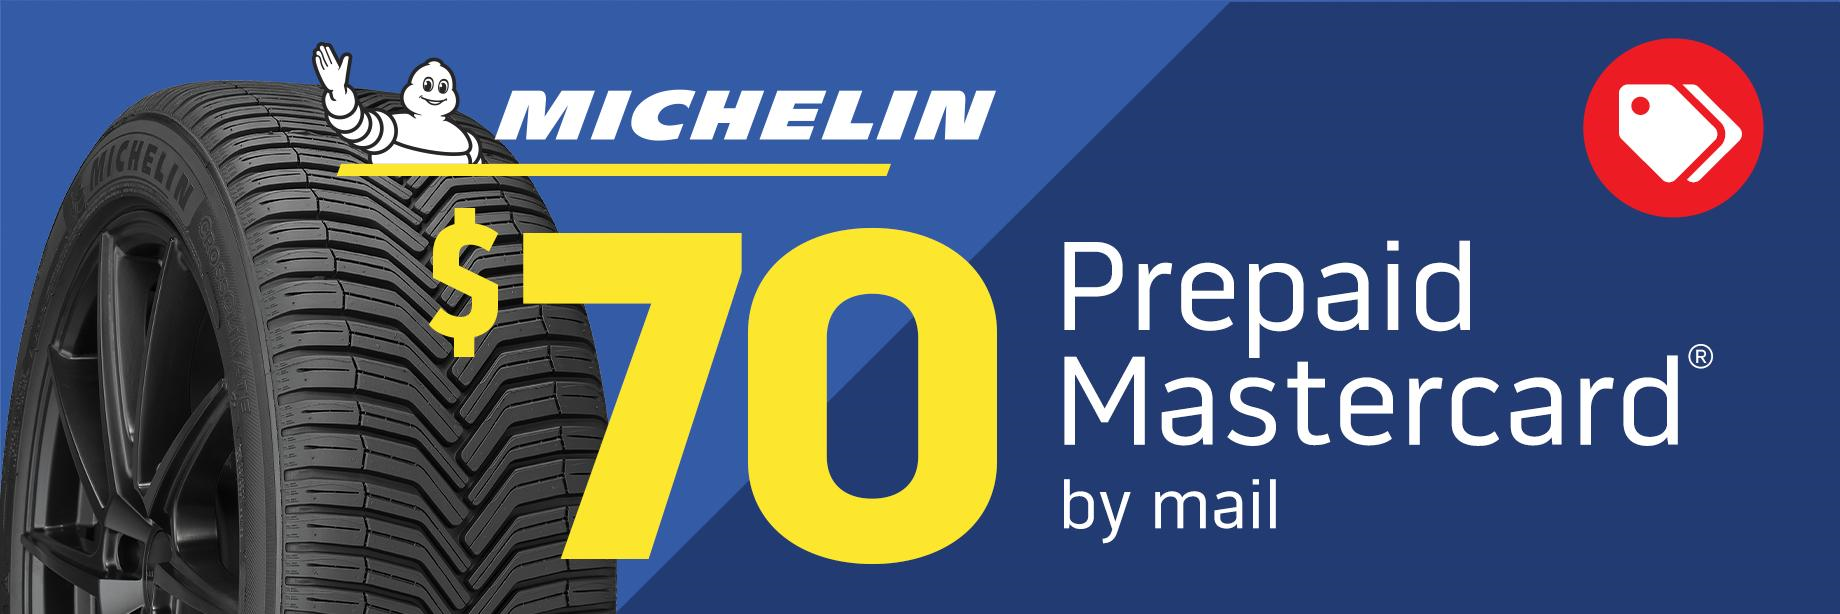 Discount Tire Direct Michelin Rebate